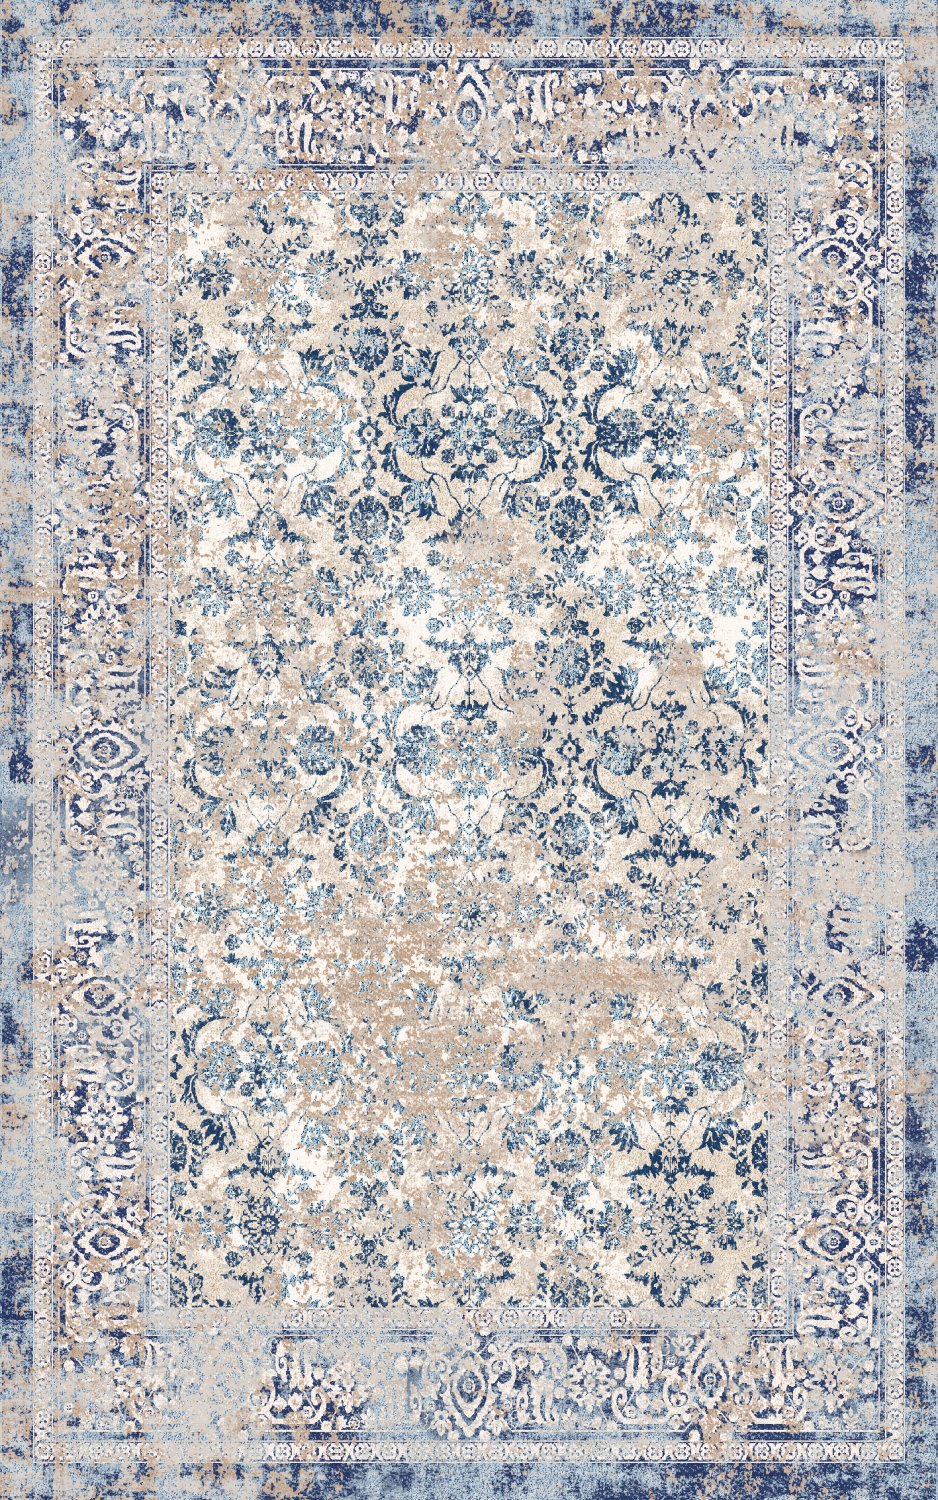 Wilton rug - Denizli (blue)